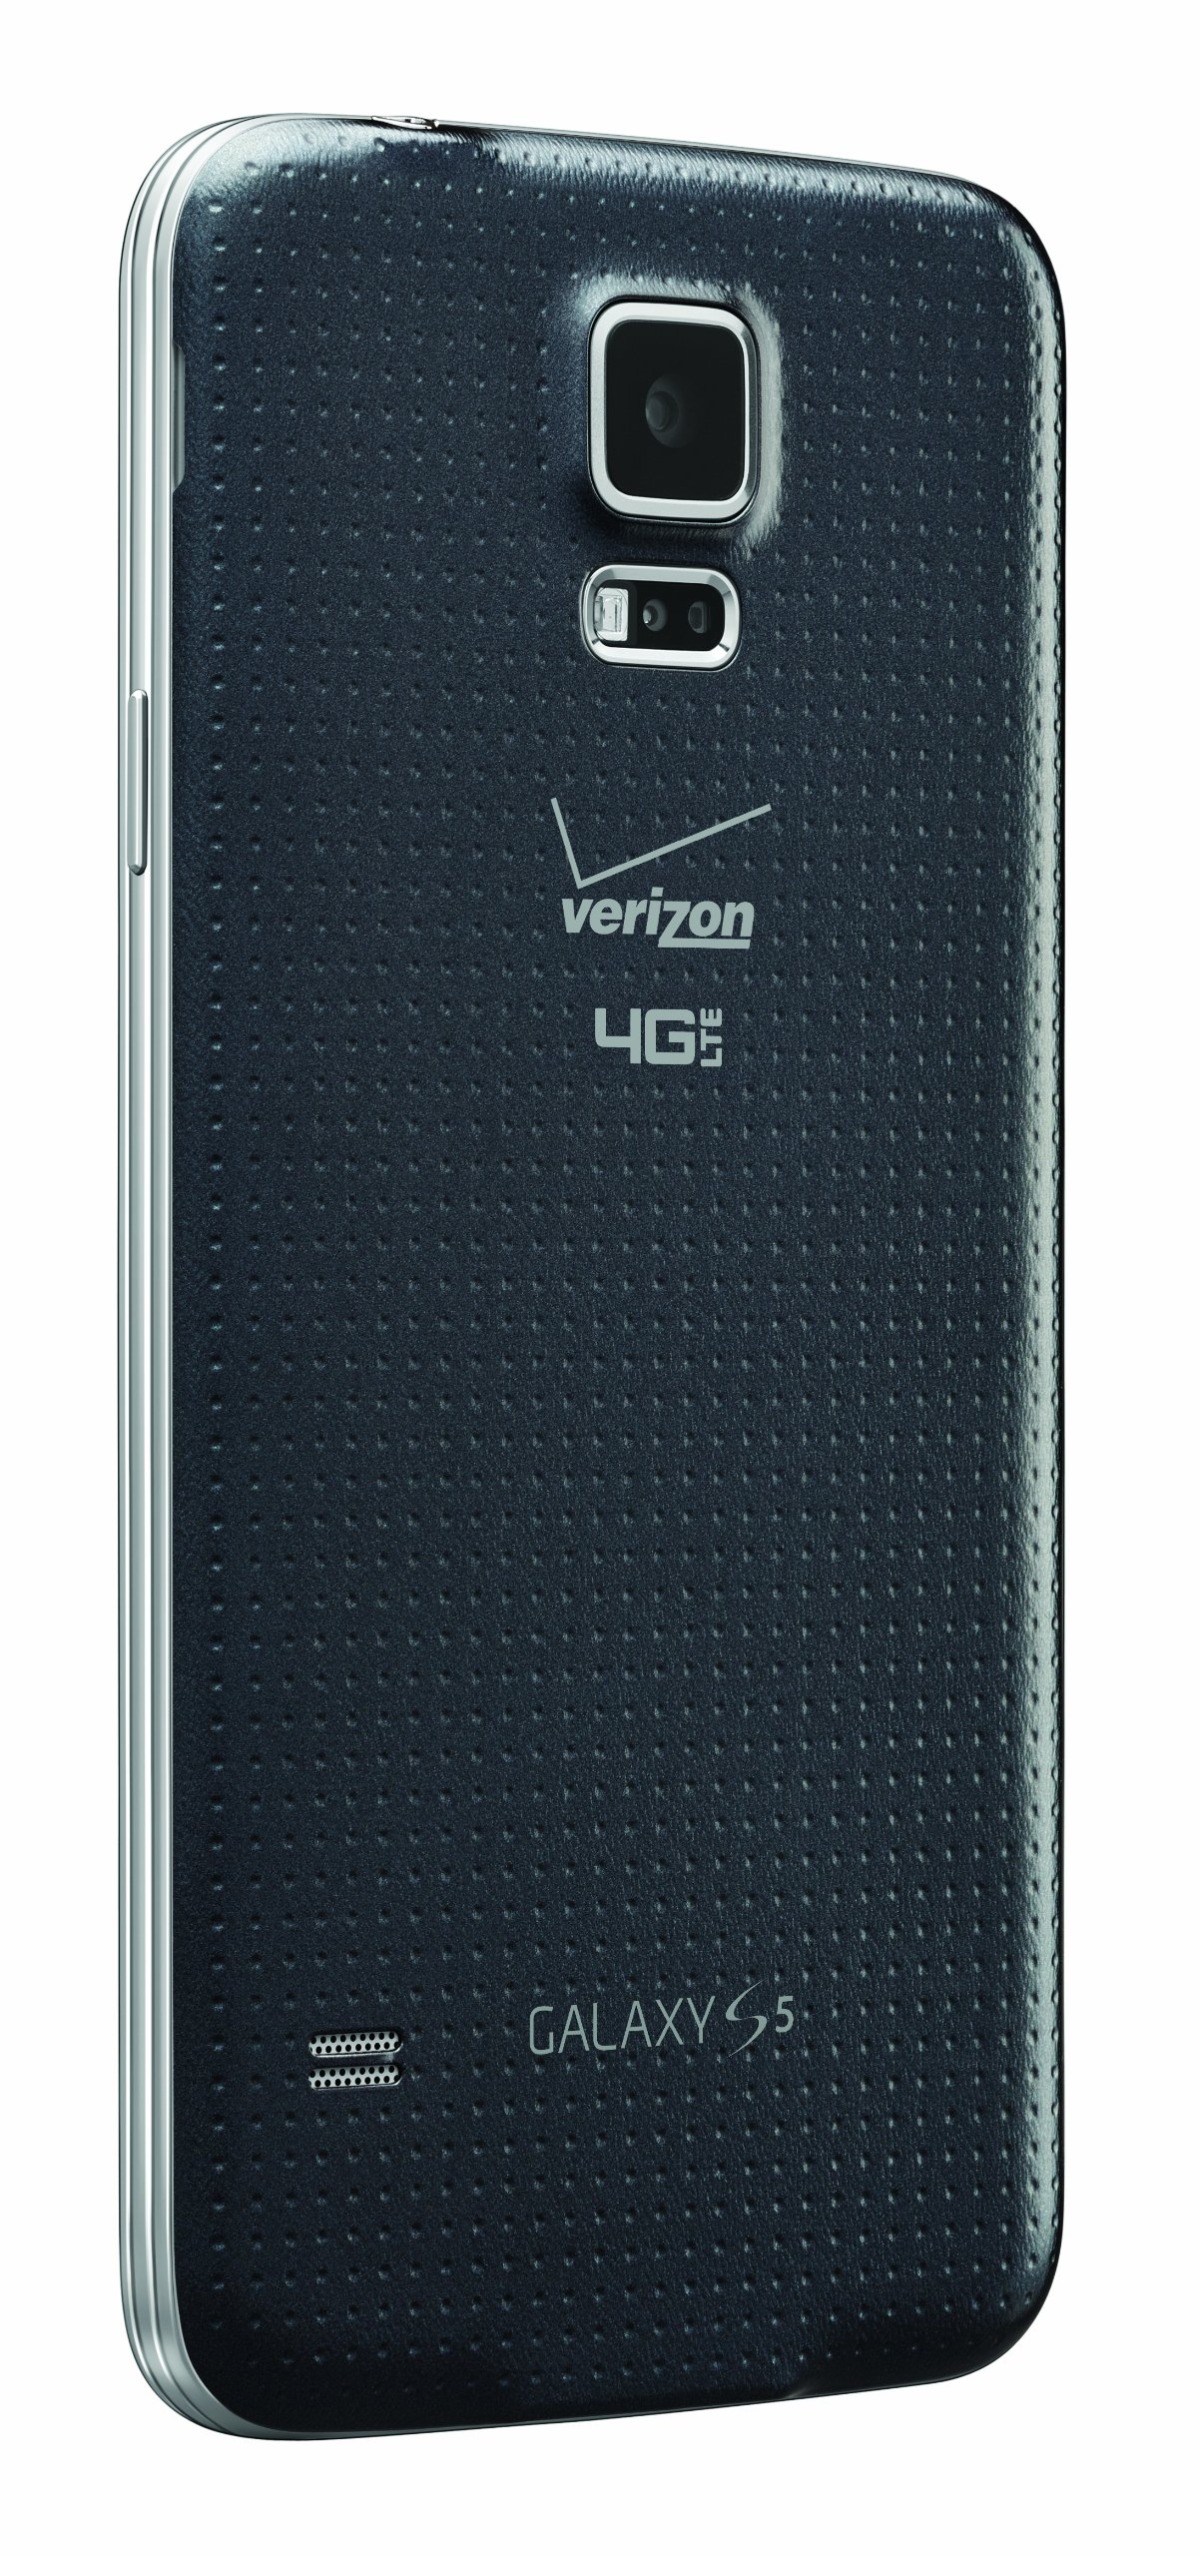 SAMSUNG Galaxy S5, Black 16GB (Verizon Wireless) | The Storepaperoomates Retail Market - Fast Affordable Shopping